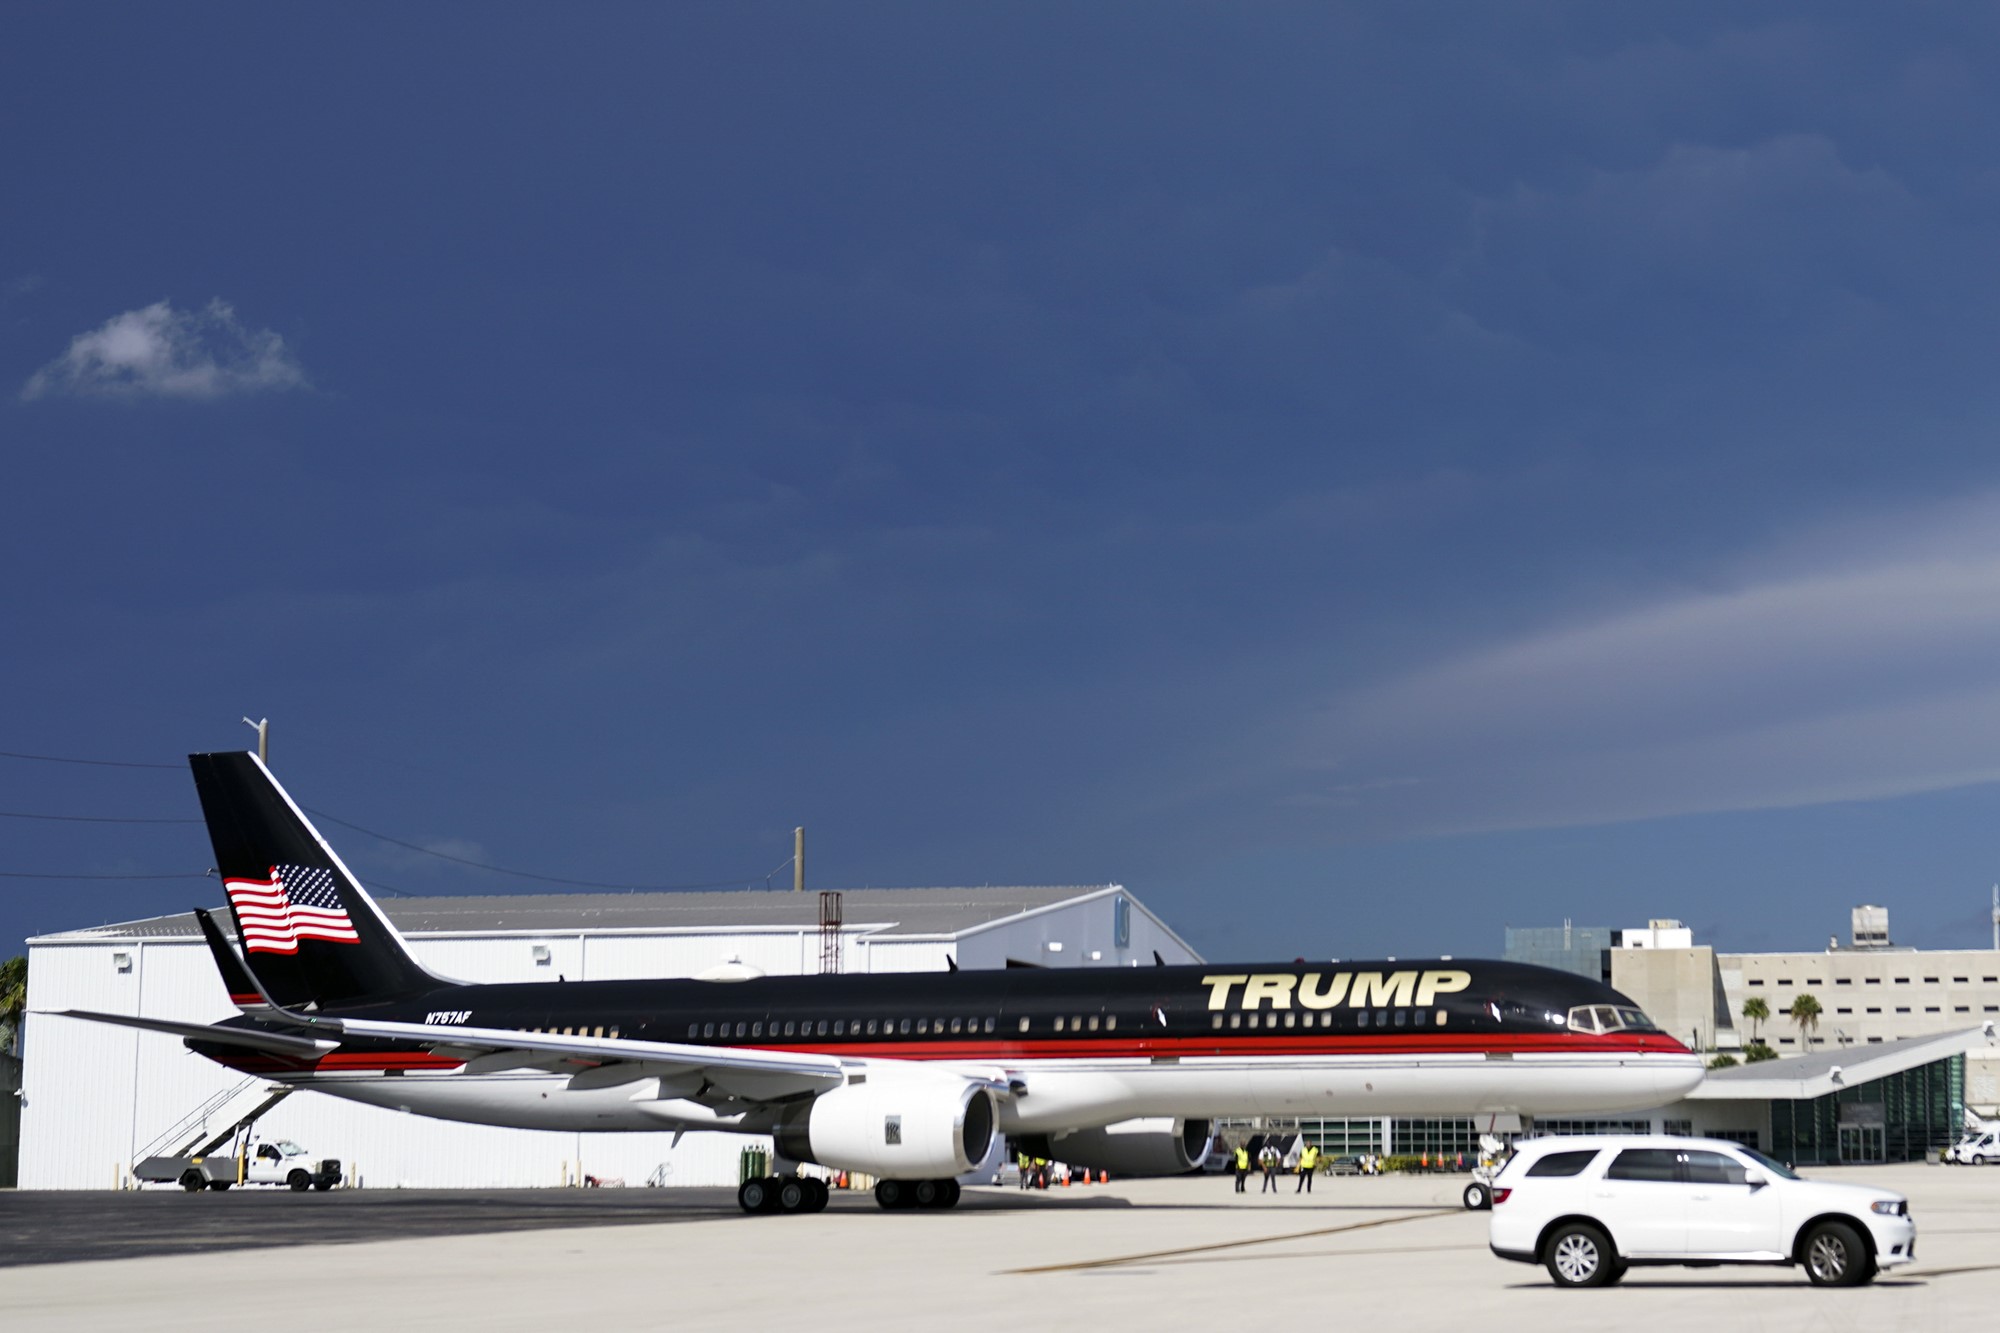 Donald Trump's personal plane seen leaving the tarmac.